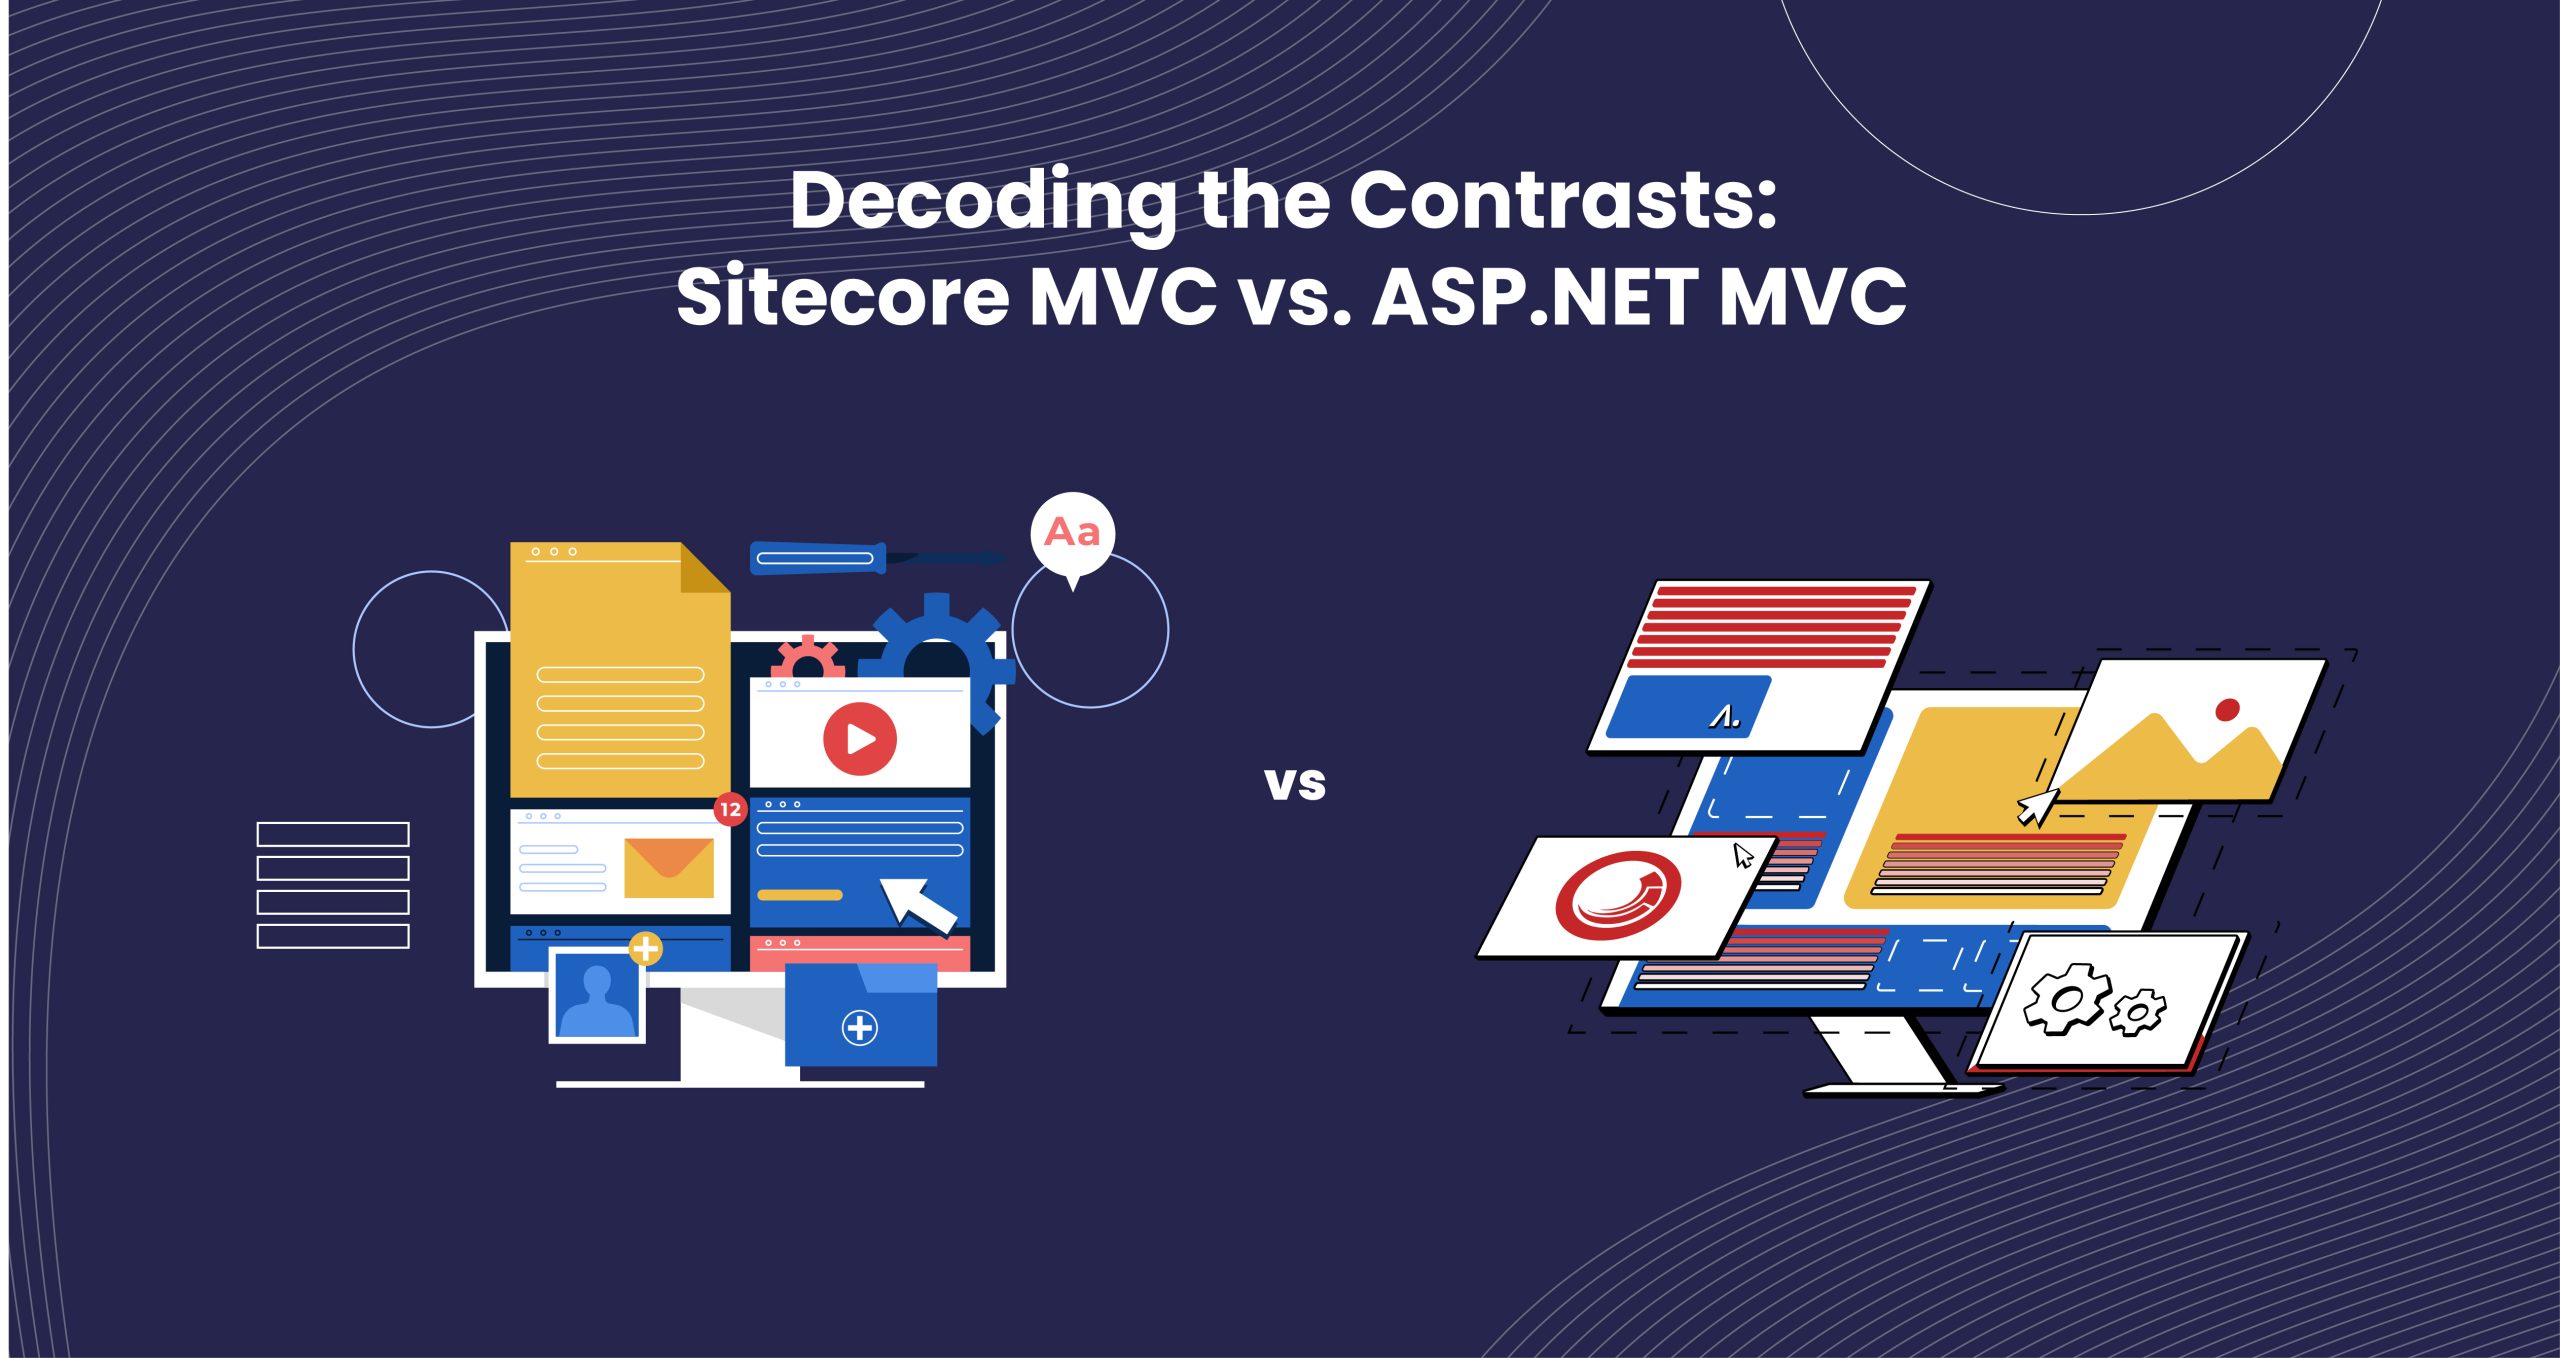 Decoding the Contrasts: Sitecore MVC vs. ASP.NET MVC